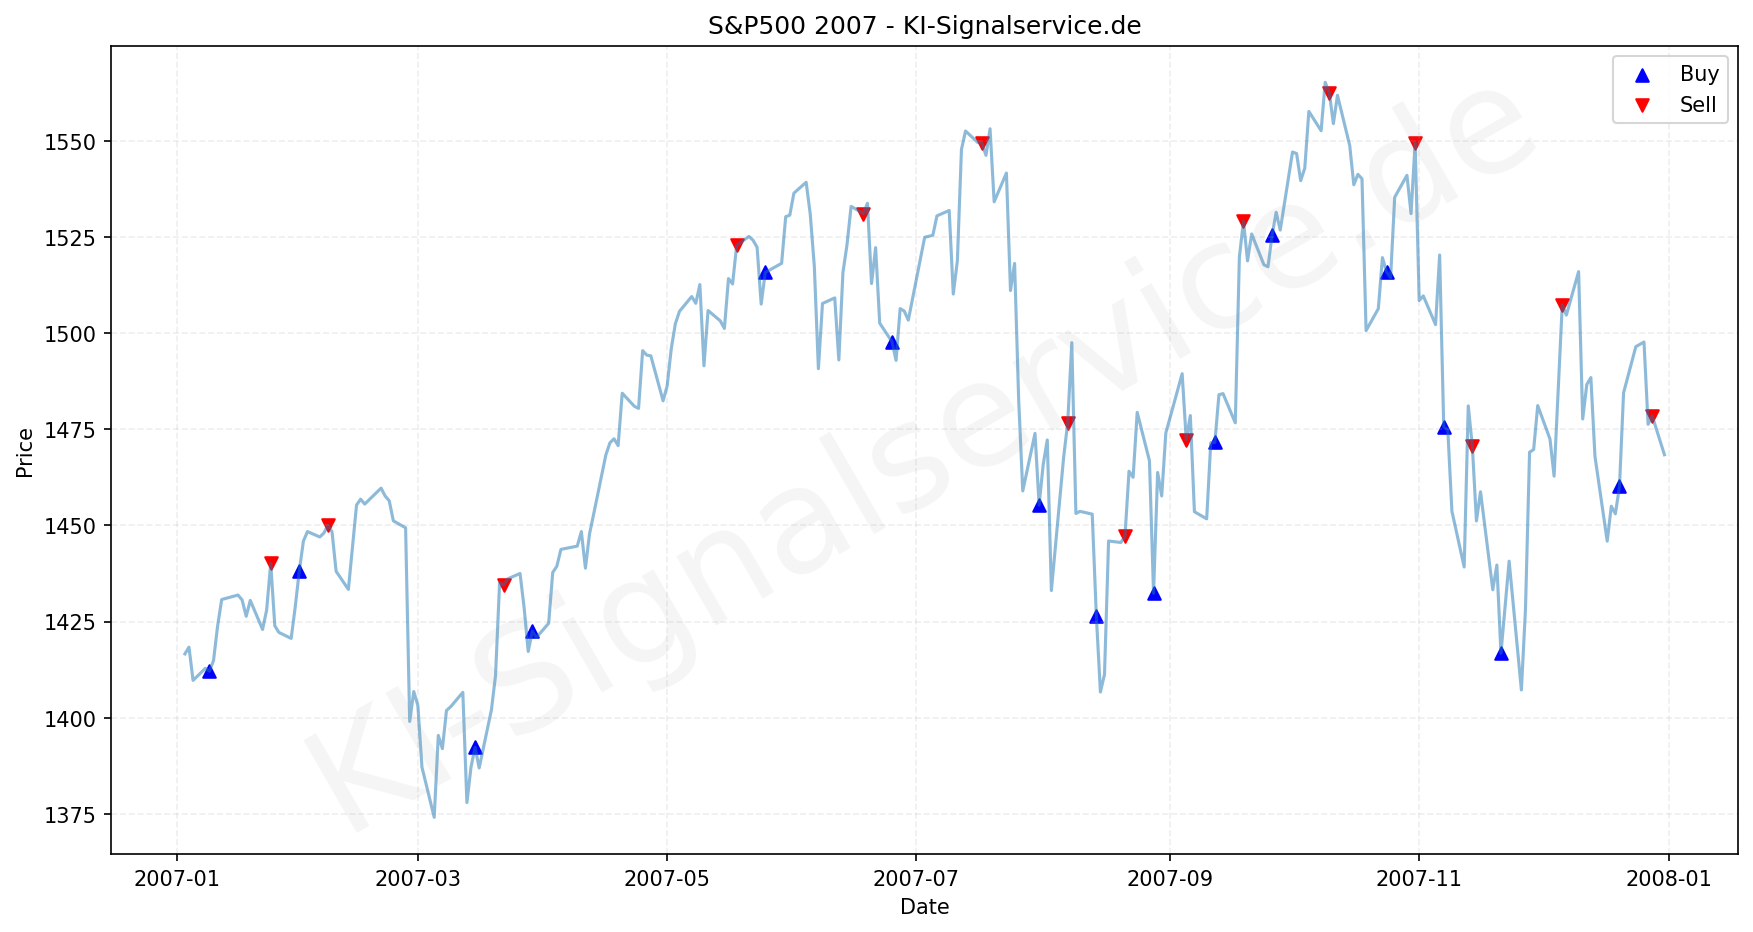 SP500 Index Performance Chart - KI Tradingsignale 2007